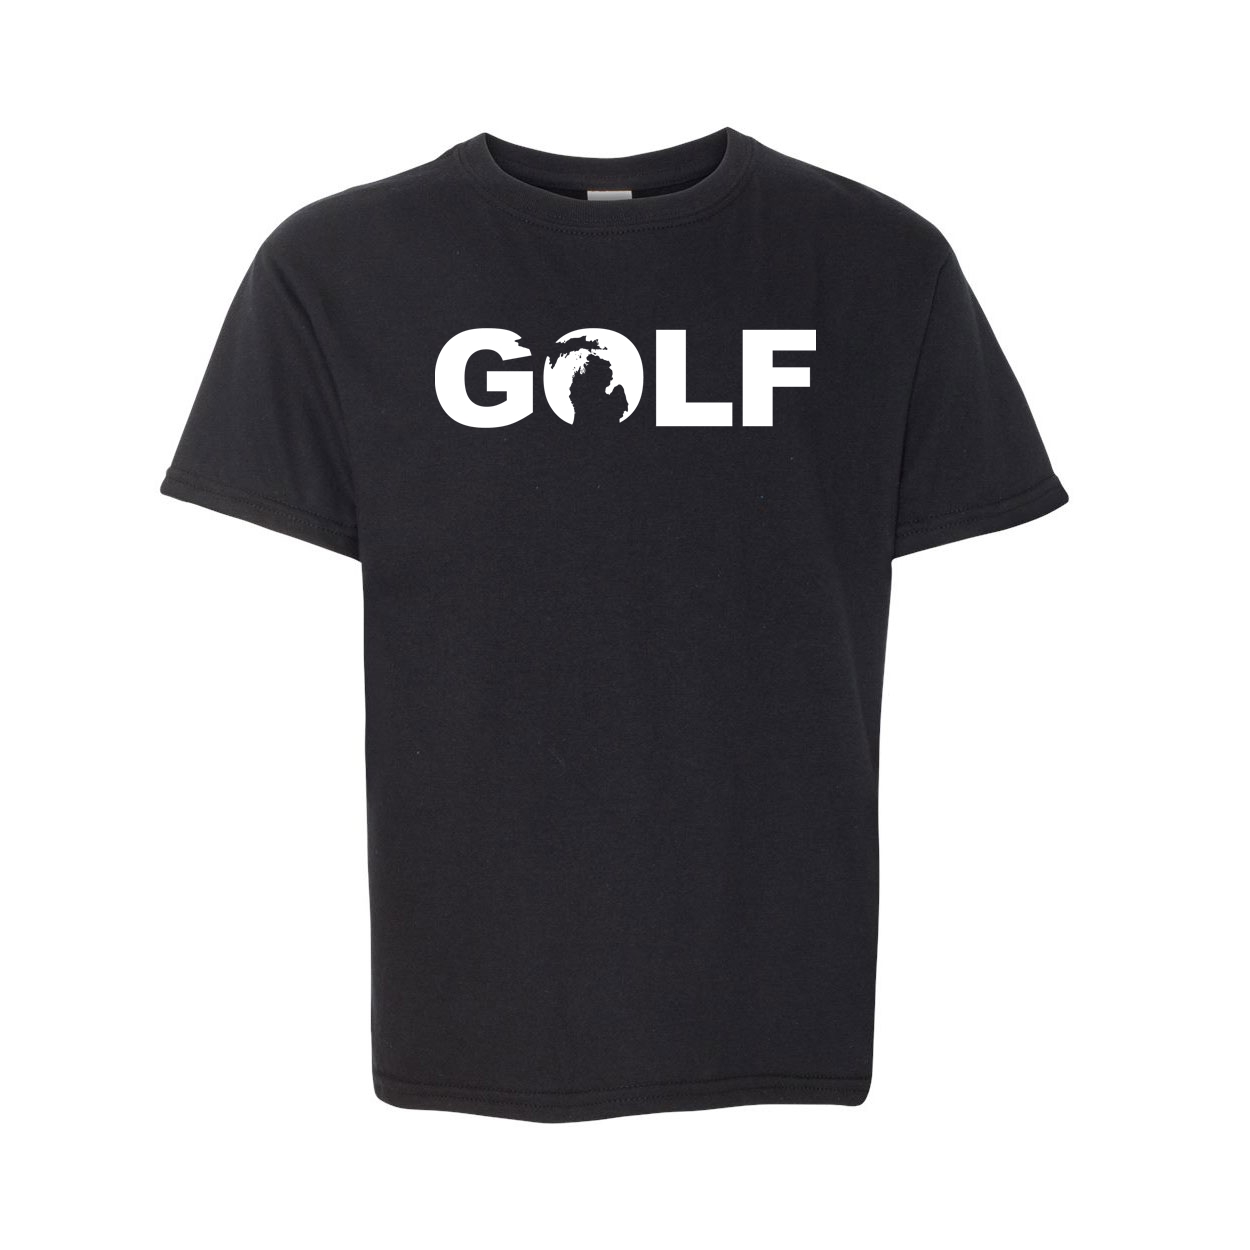 Golf Michigan Classic Youth T-Shirt Black (White Logo)